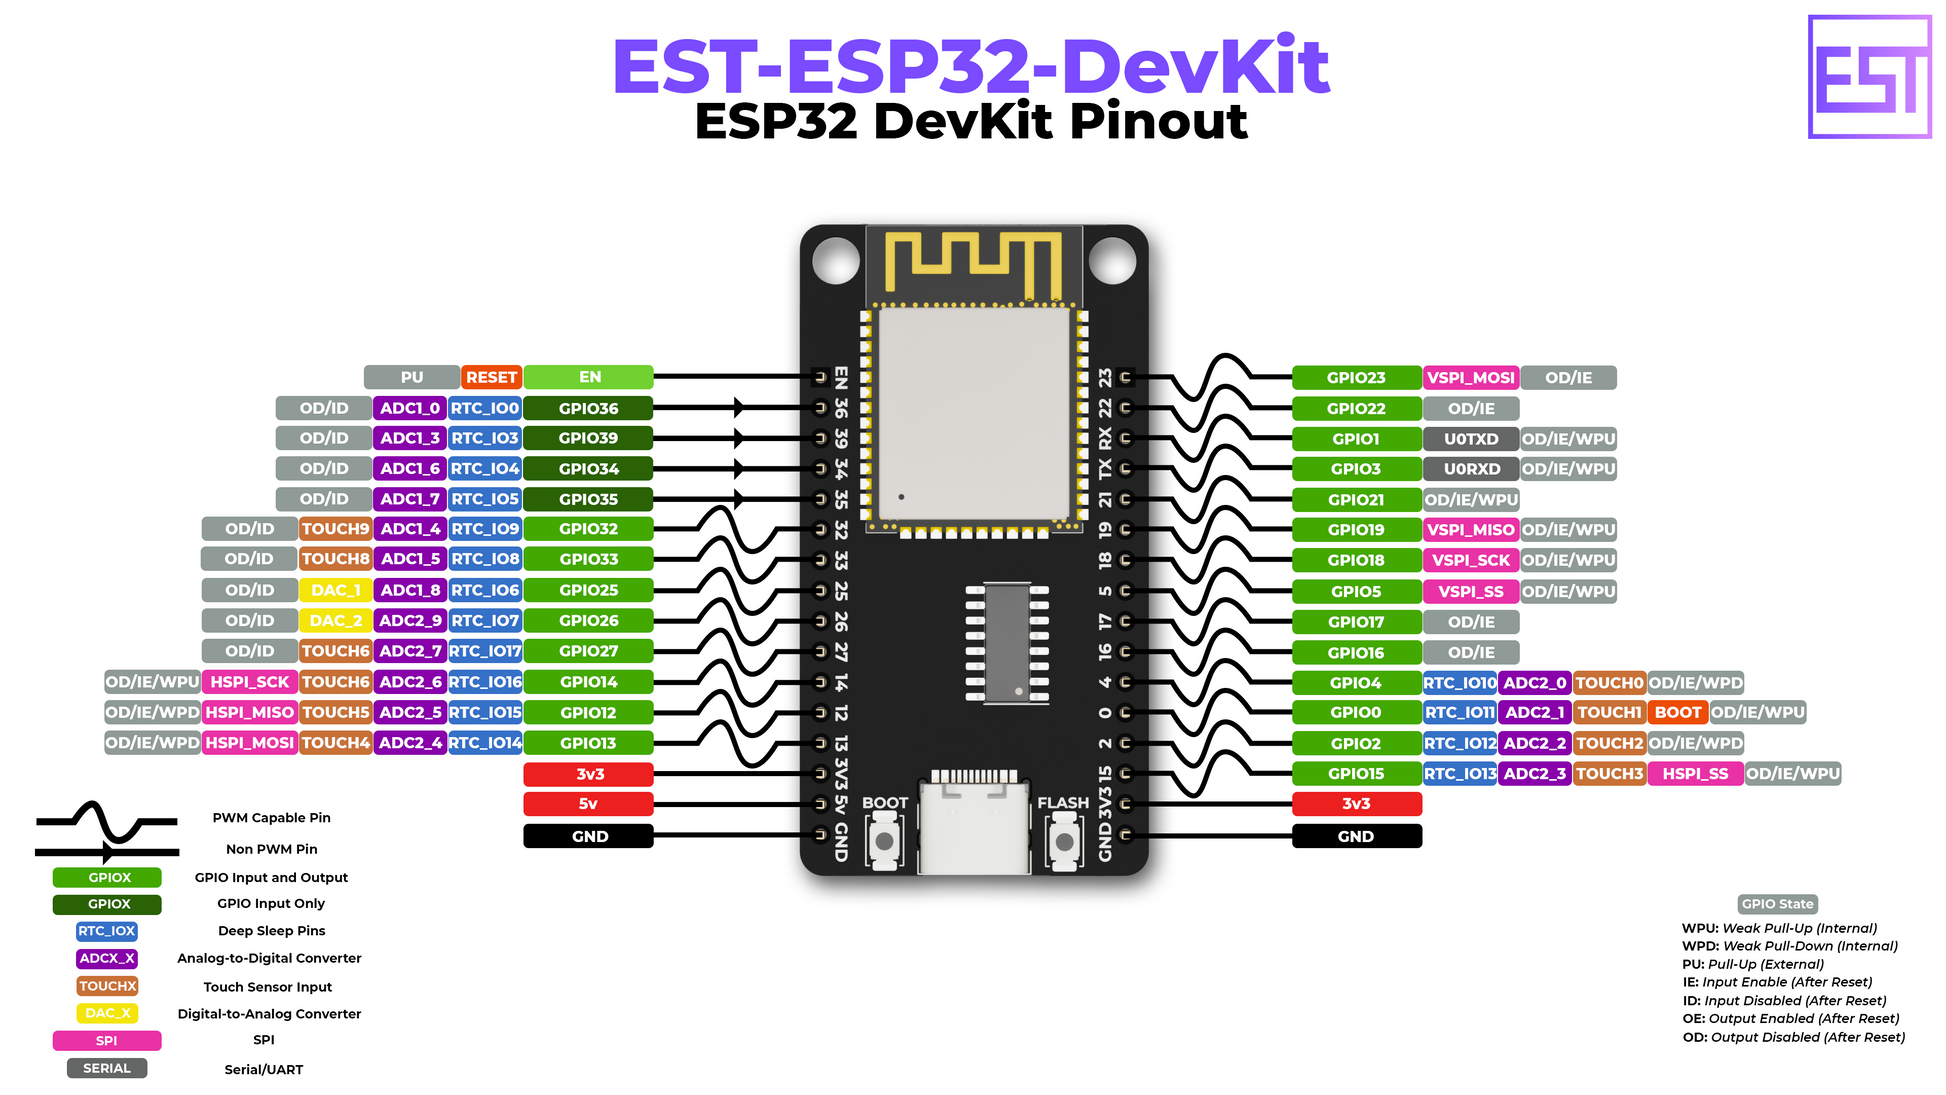 EST-PoE-32 - ESP32 PoE Development Kit